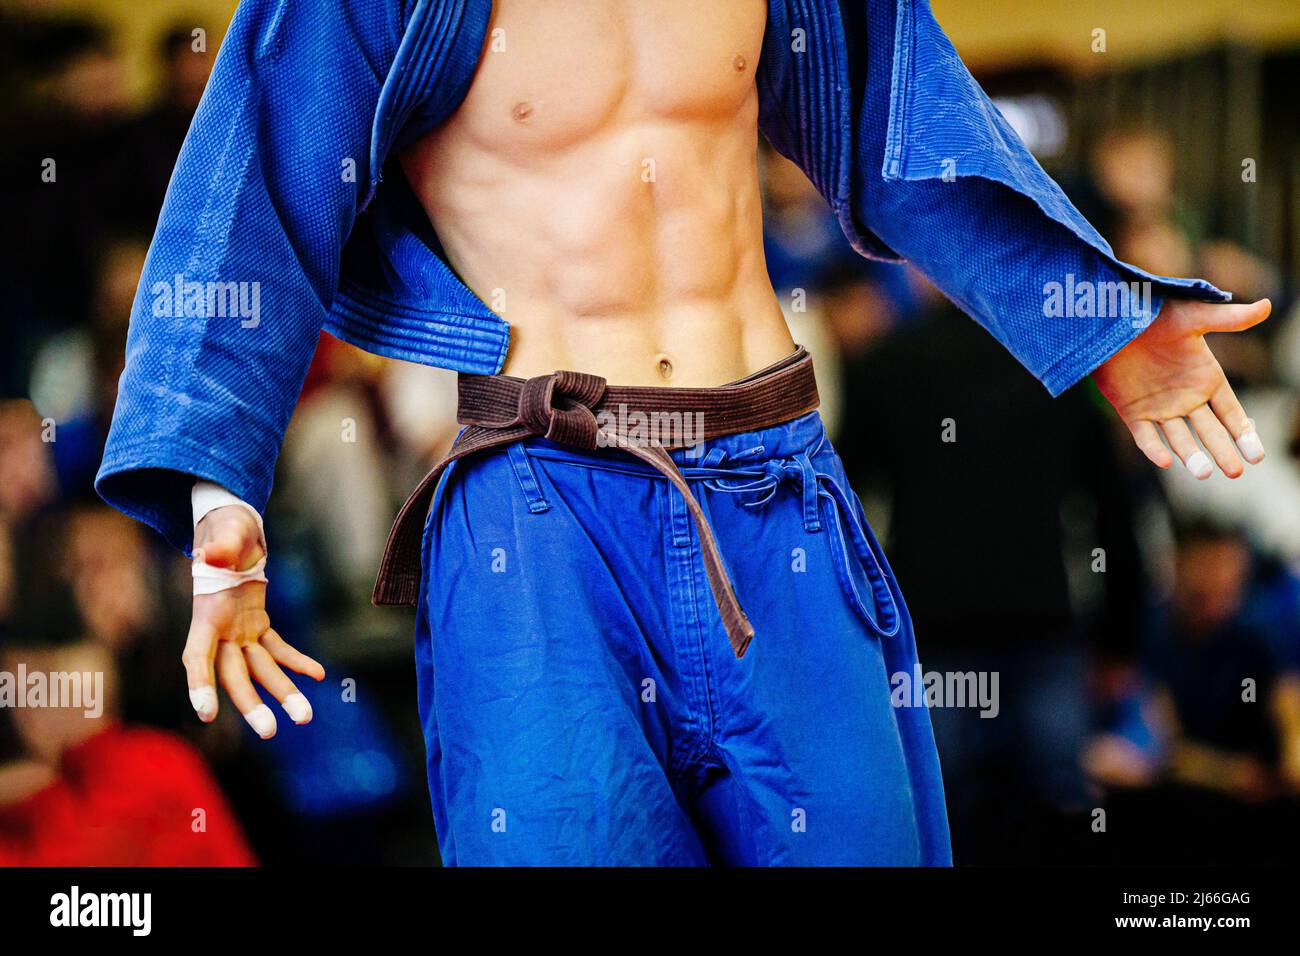 athlète judoka masculin dans un kimono bleu Banque D'Images